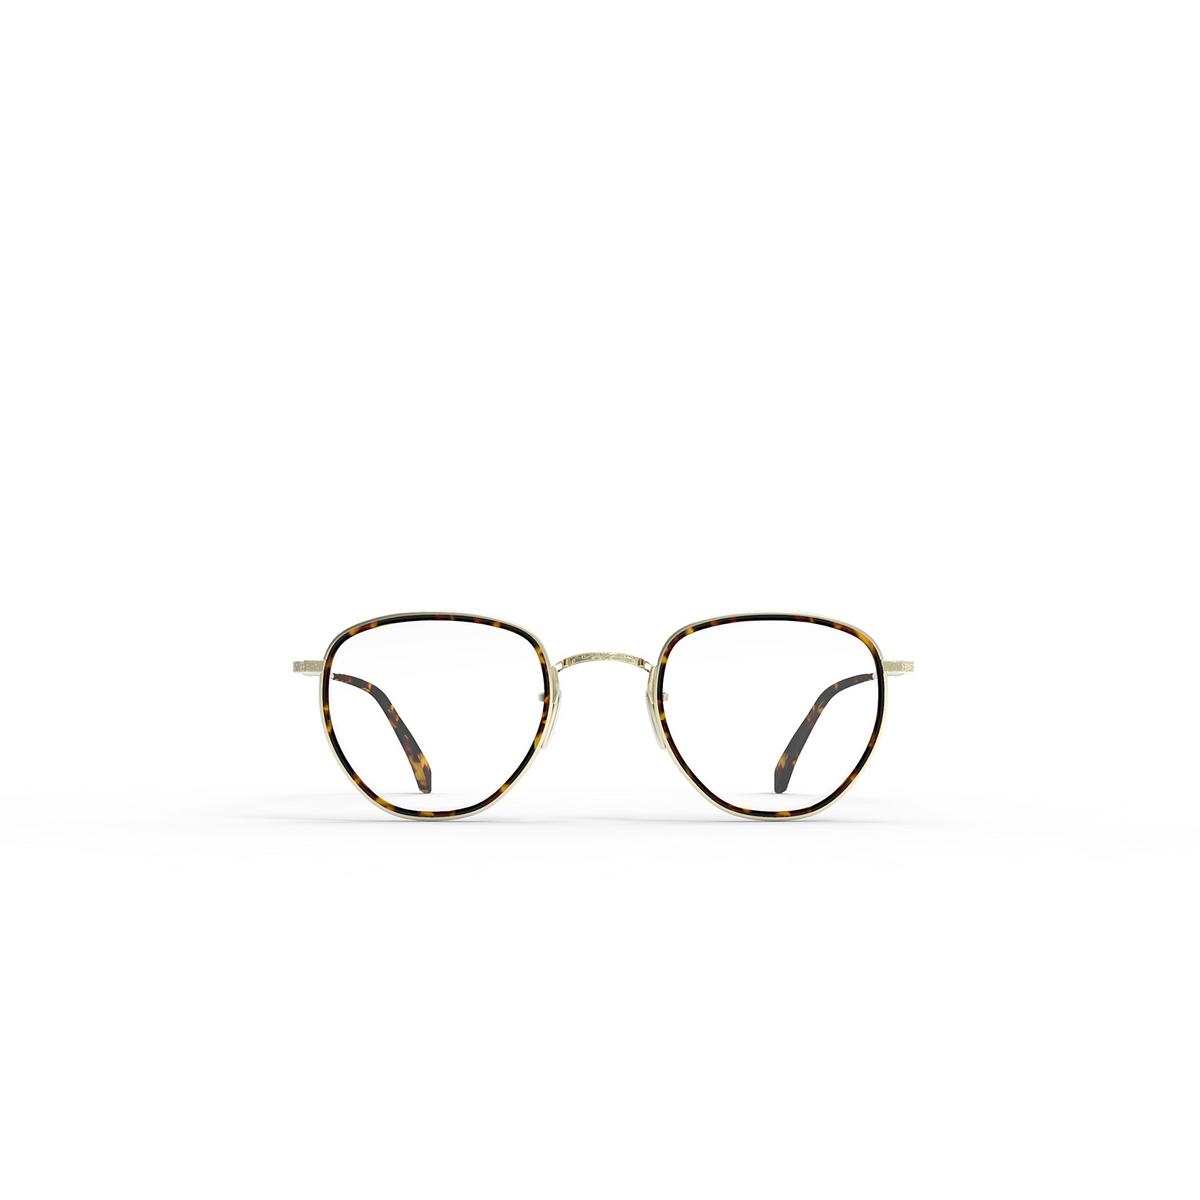 Mr. Leight ROKU C Eyeglasses BBY-12KG Bradbury-12K White Gold - front view